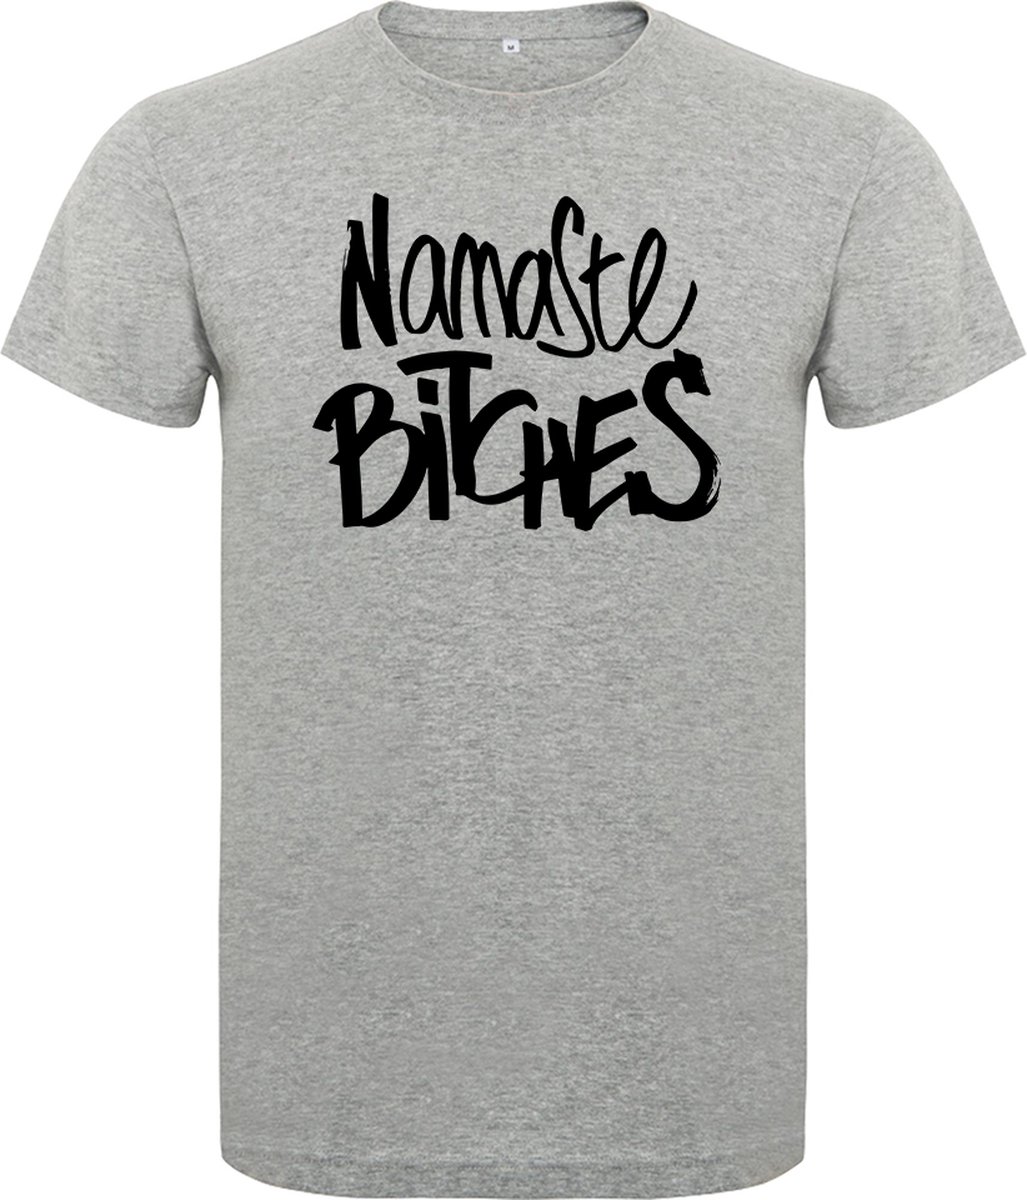 T-Shirt - Casual T-Shirt - Fun T-Shirt - Fun Tekst - Lifestyle T-Shirt - Grappig - Mood - Sport - Yoga - Relax - Vibe - Namaste Bitches - Maat S